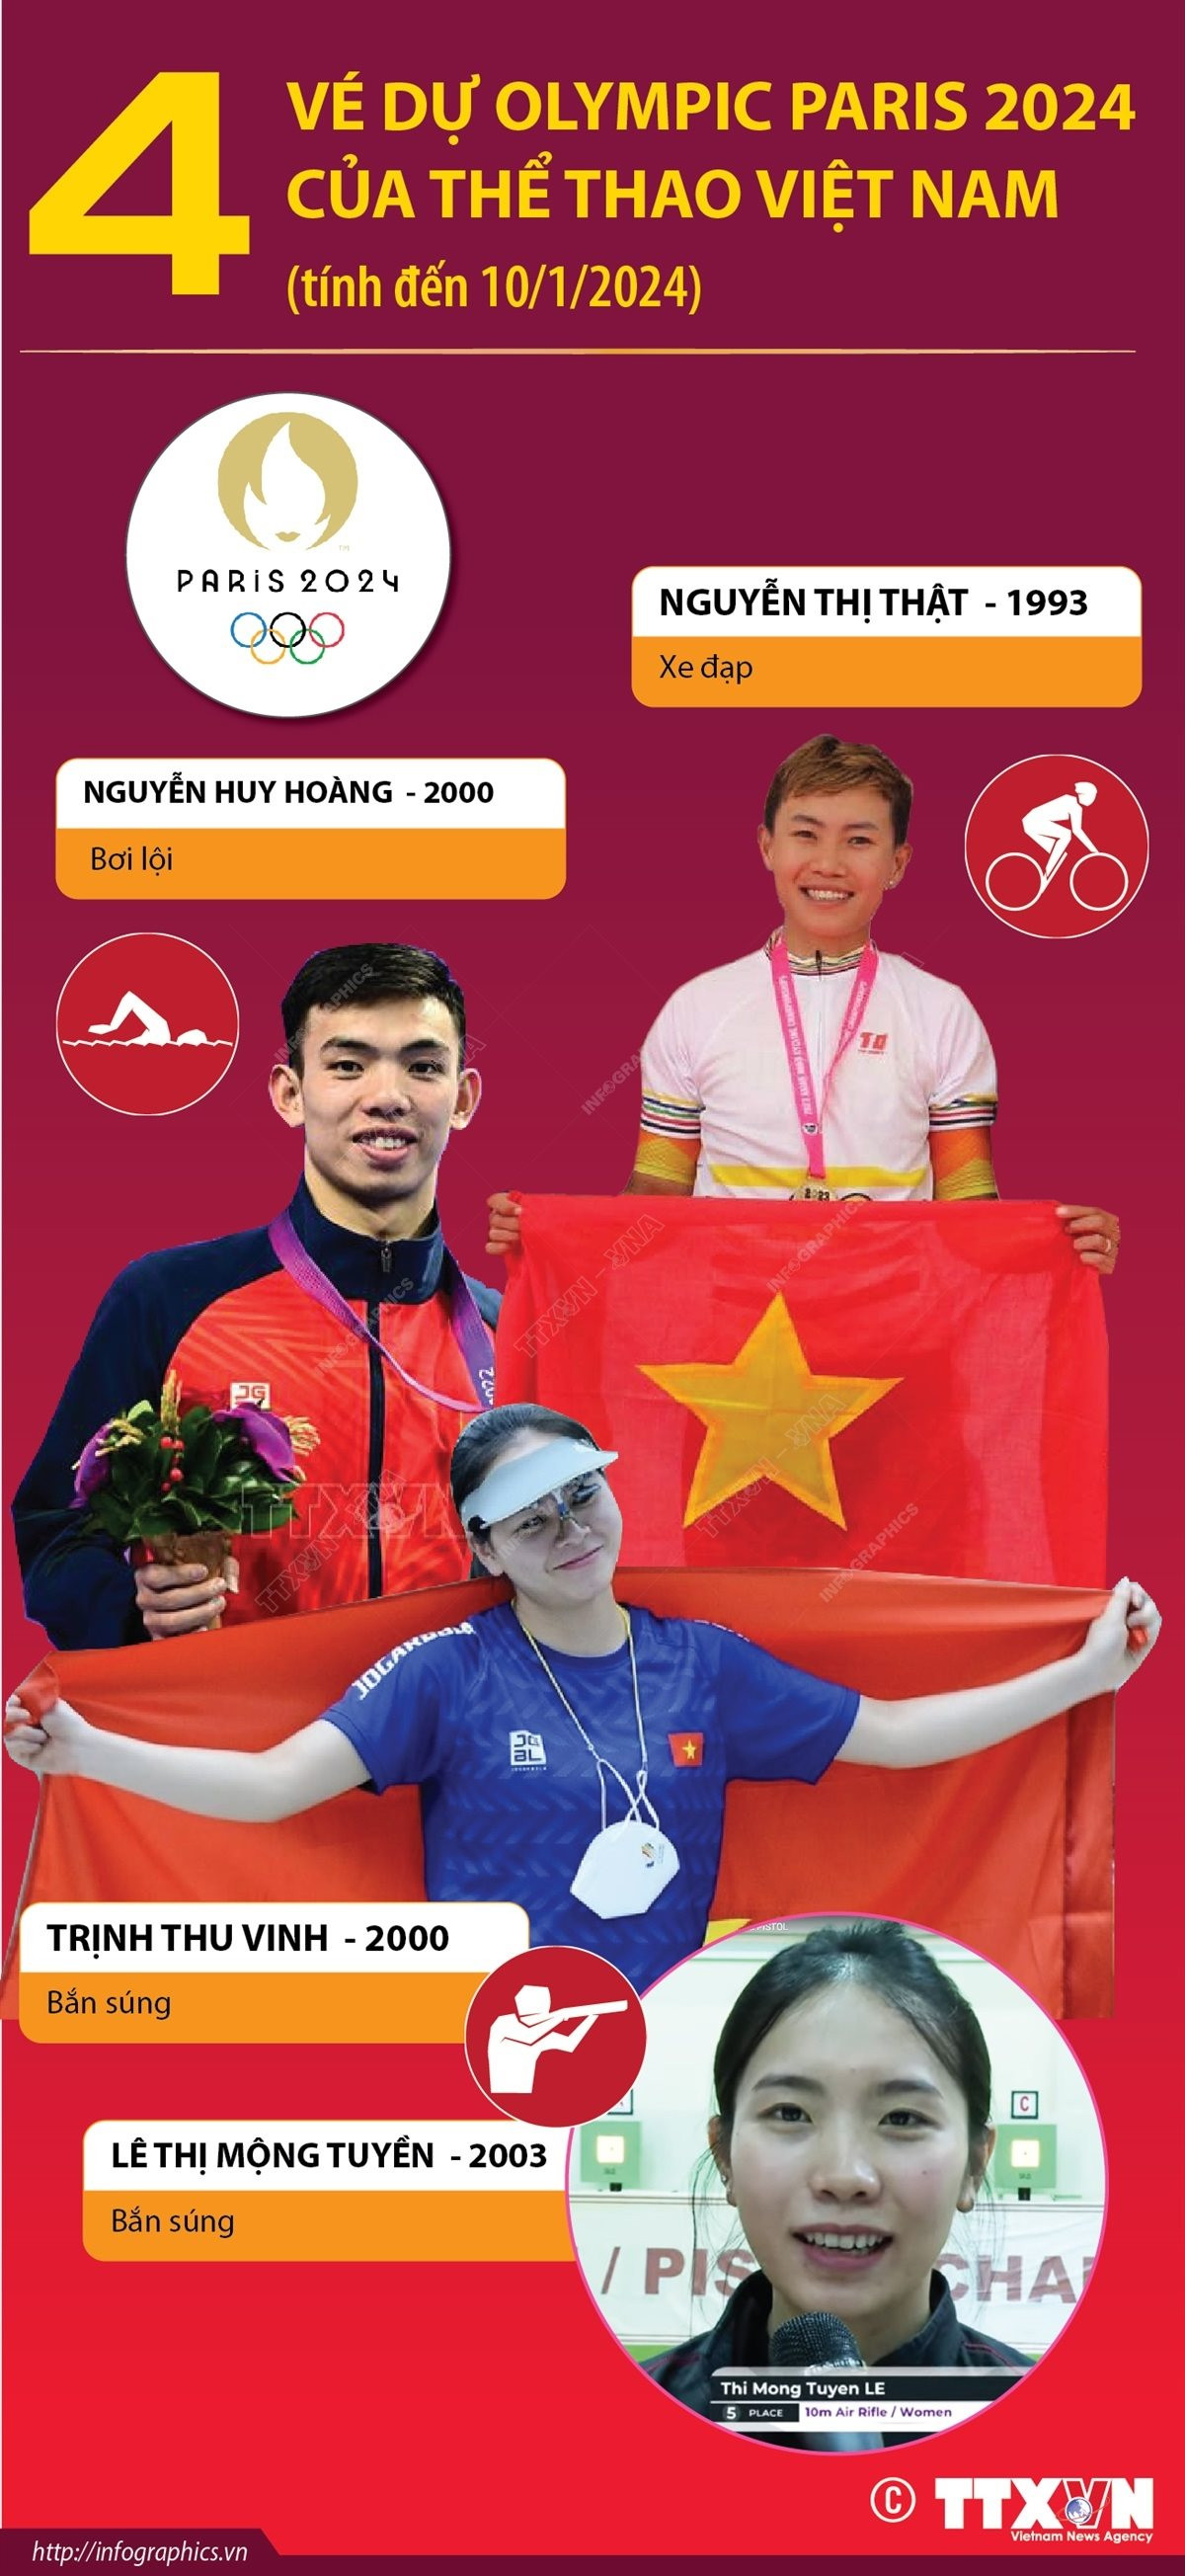 vna_potal_4_ve_du_olympic_paris_2024_cua_the_thao_viet_nam_tinh_den_1012024_7174009.jpg